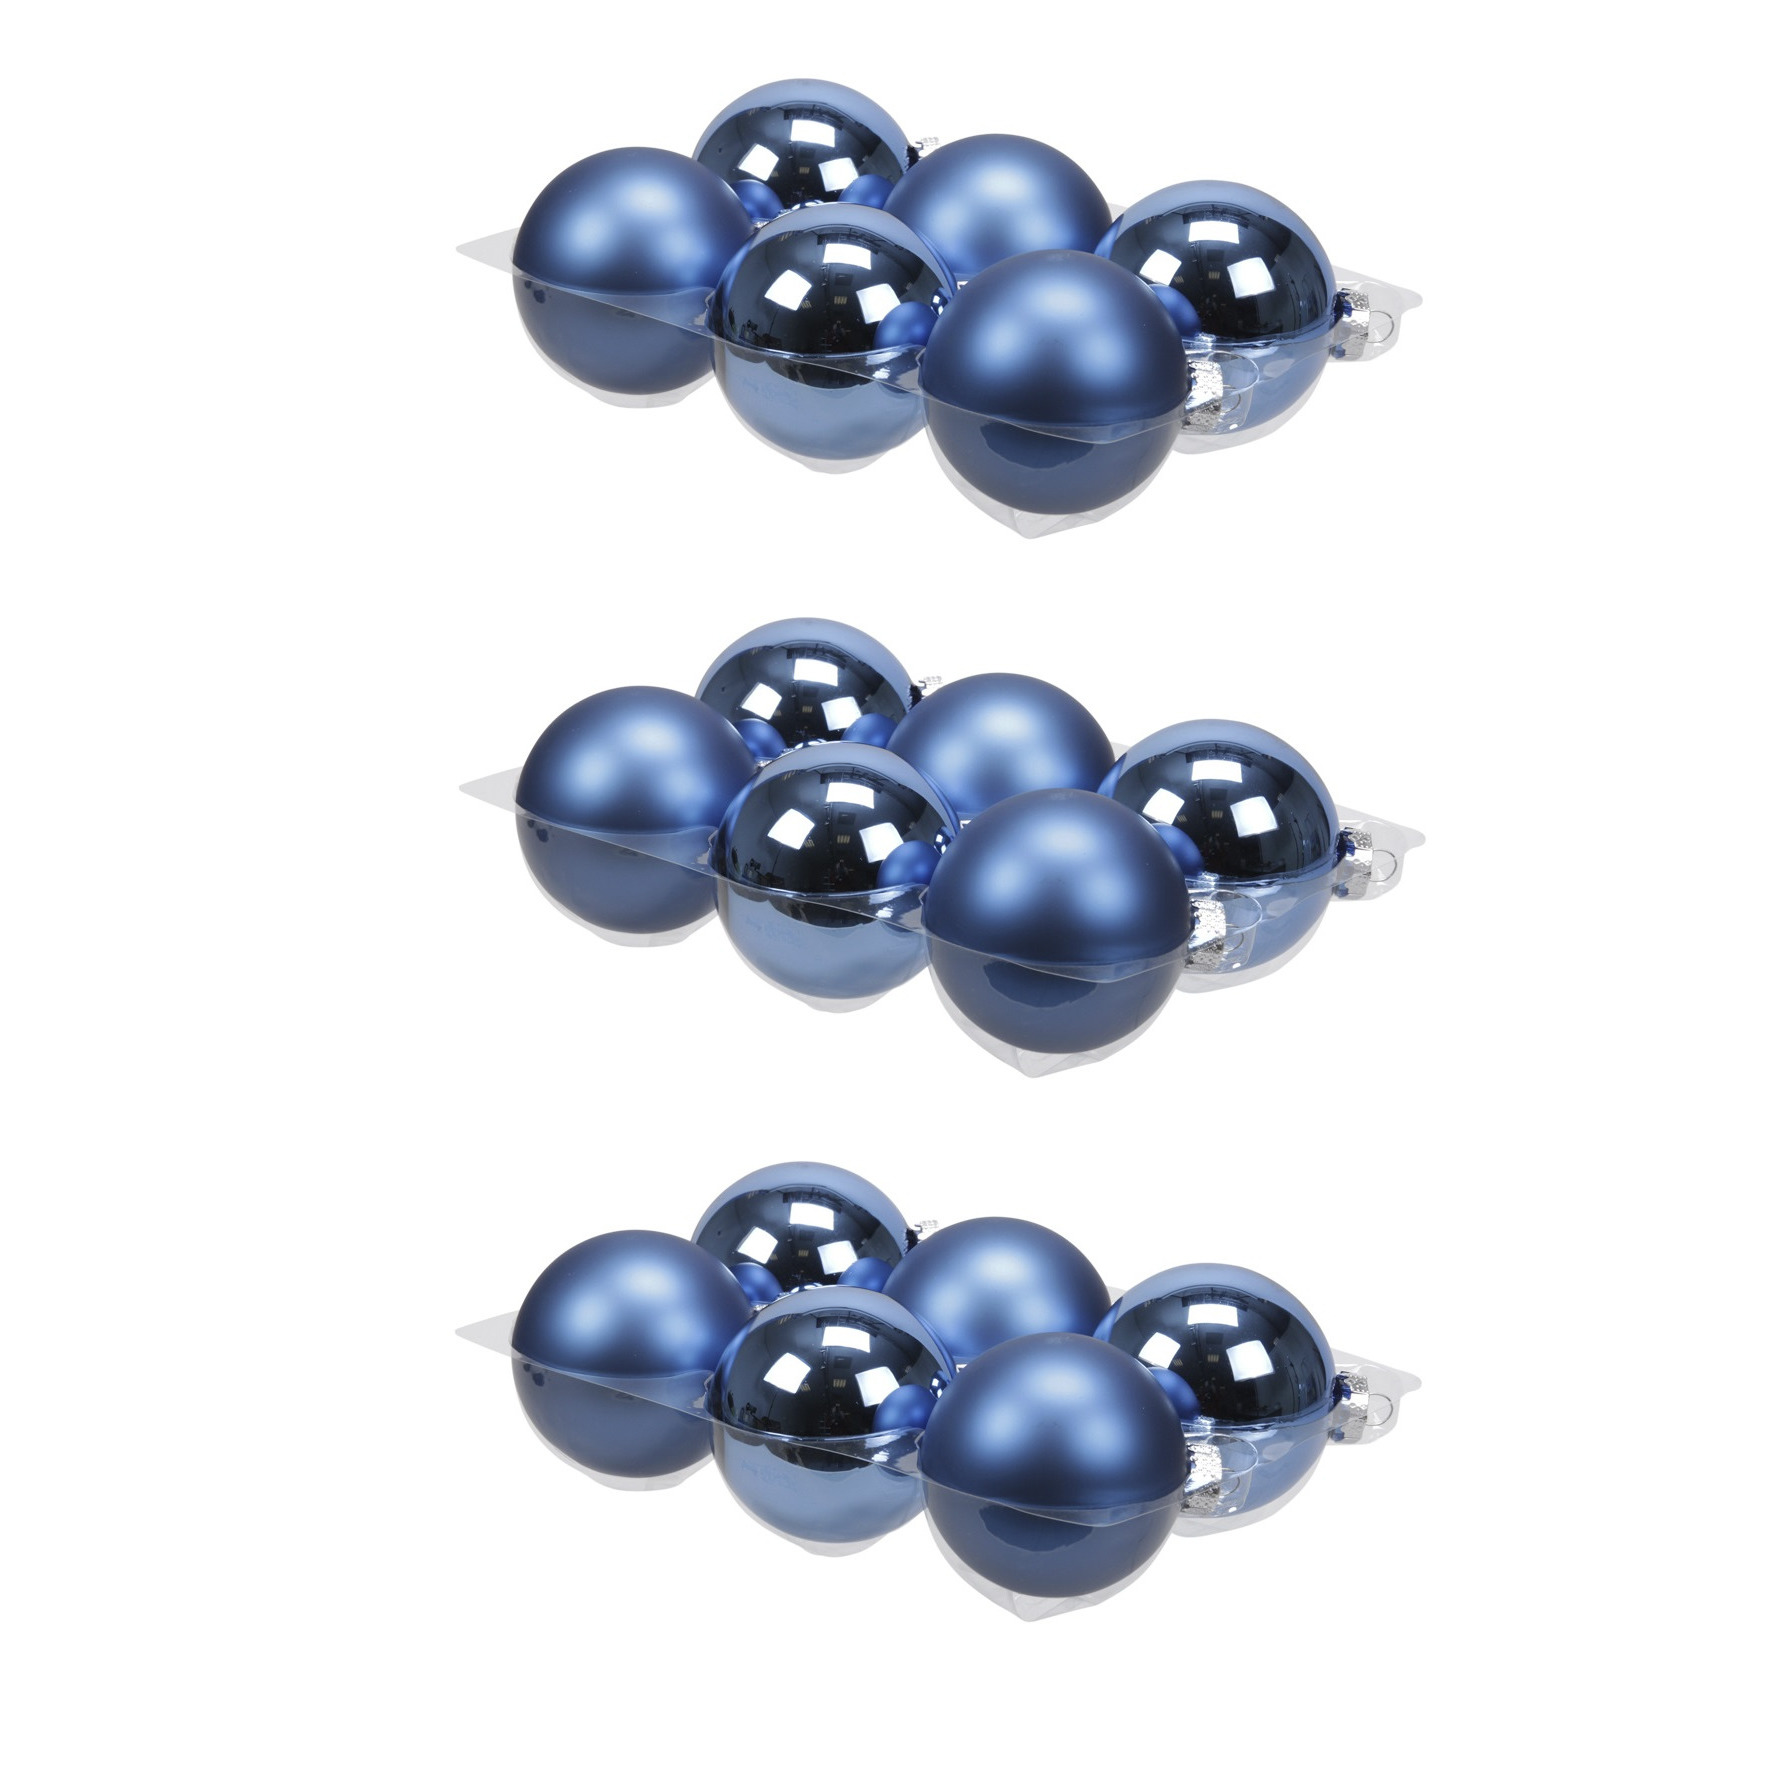 24x stuks glazen kerstballen blauw (basic) 8 cm mat-glans